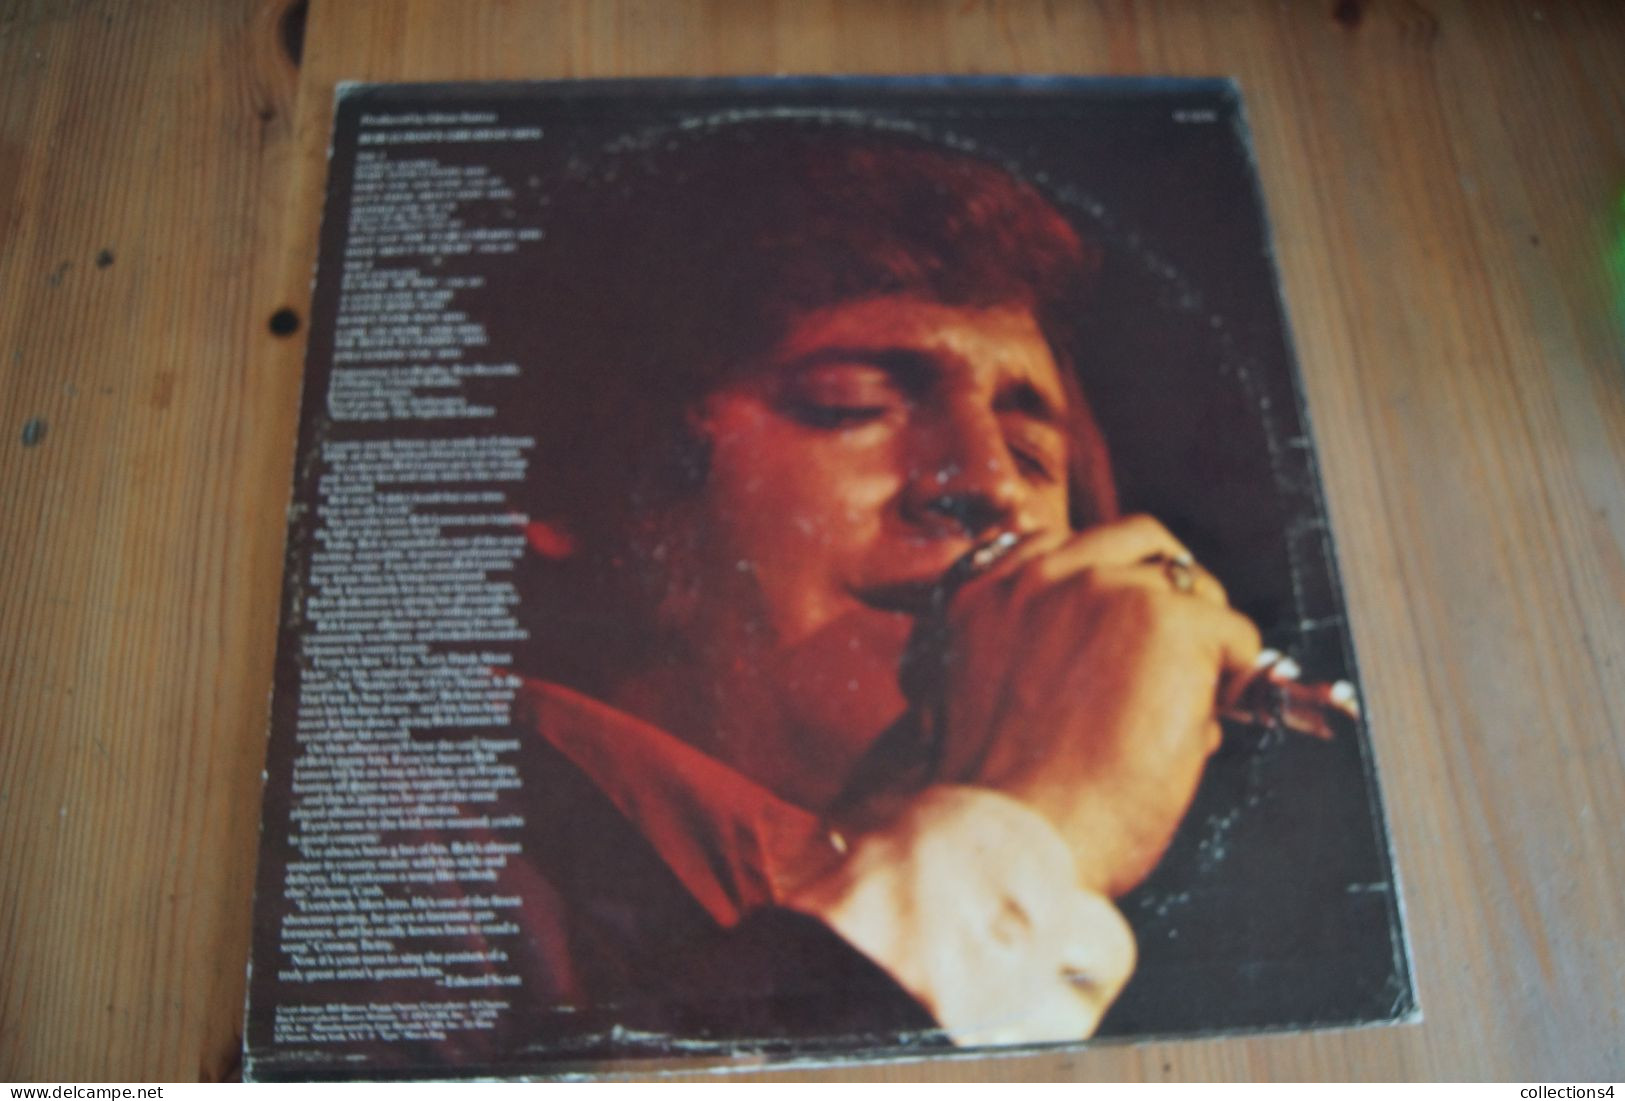 BOB LUMAN GREATEST HITS LP AMERICAIN 1974 COUNTRY - Country Y Folk